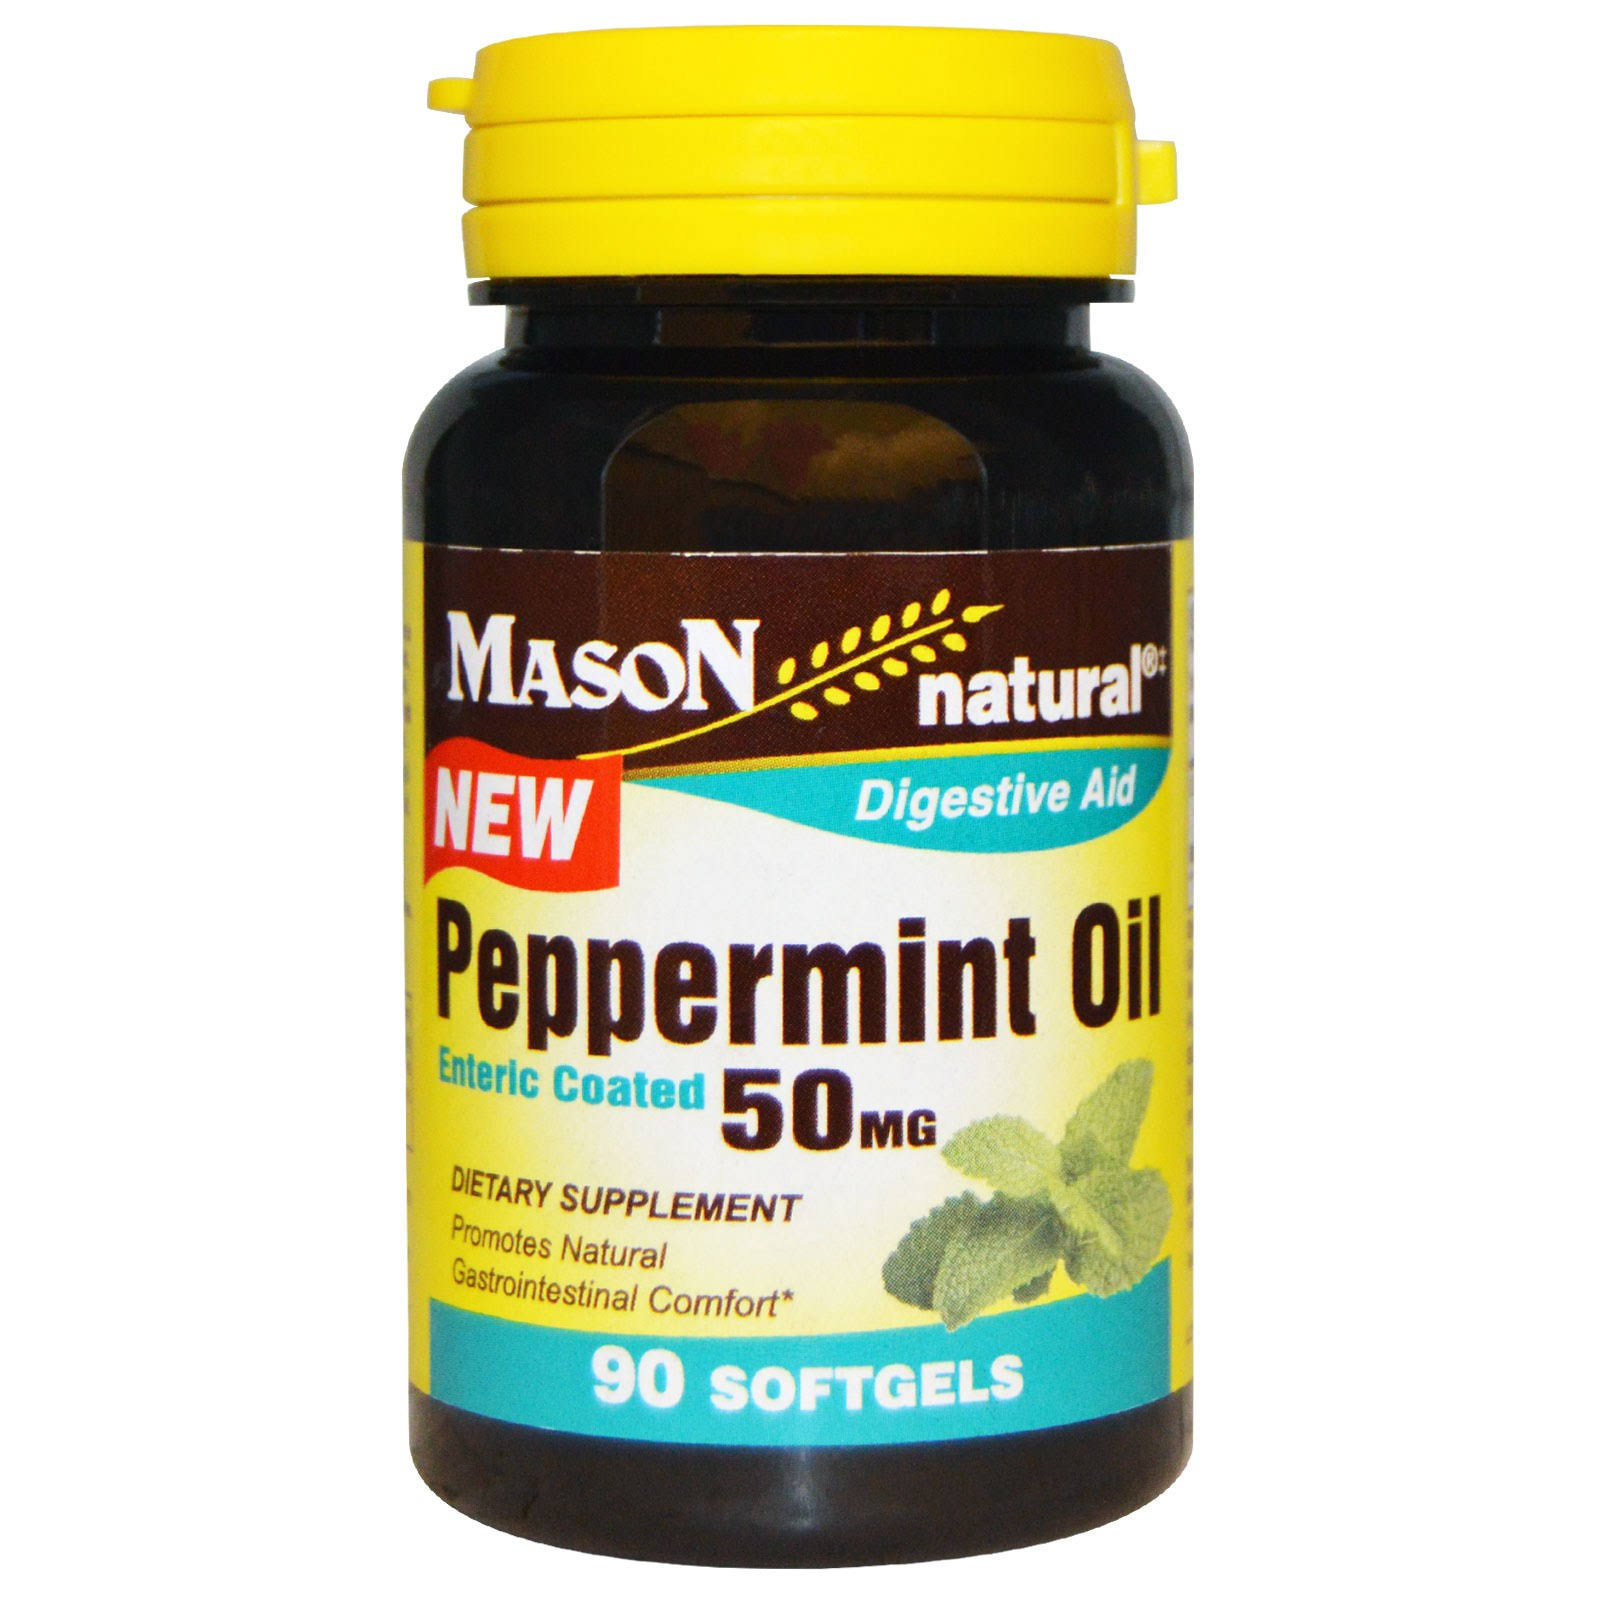 Mason Natural Digestive Aid Peppermint Oil - 90 Softgels, 50mg